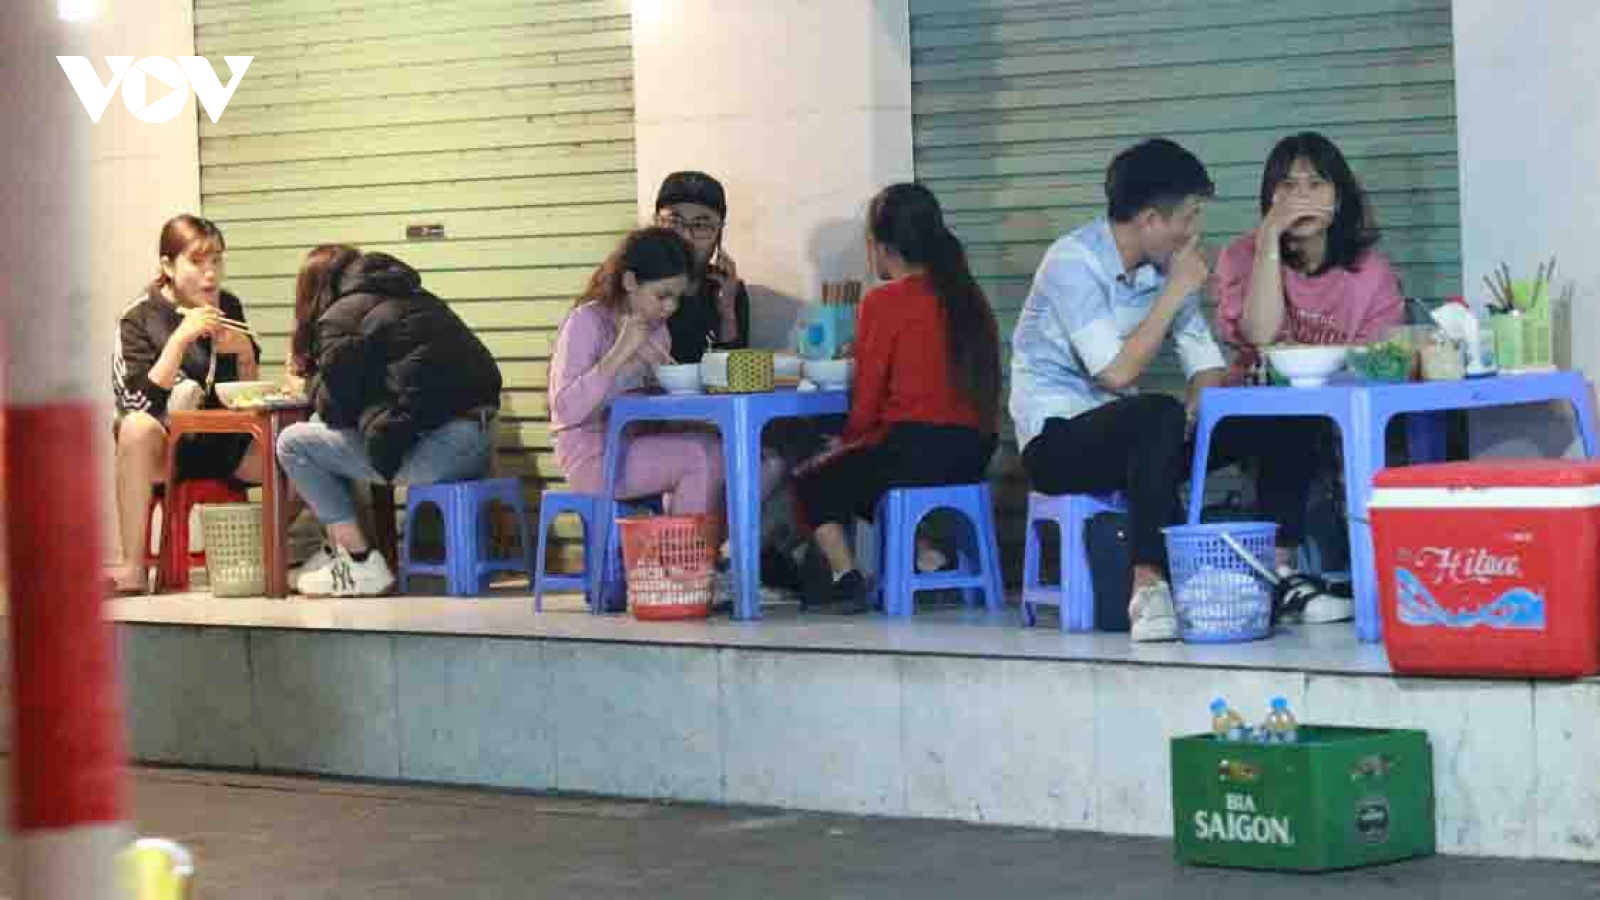 Street food stalls in Hanoi violate COVID-19 guidelines